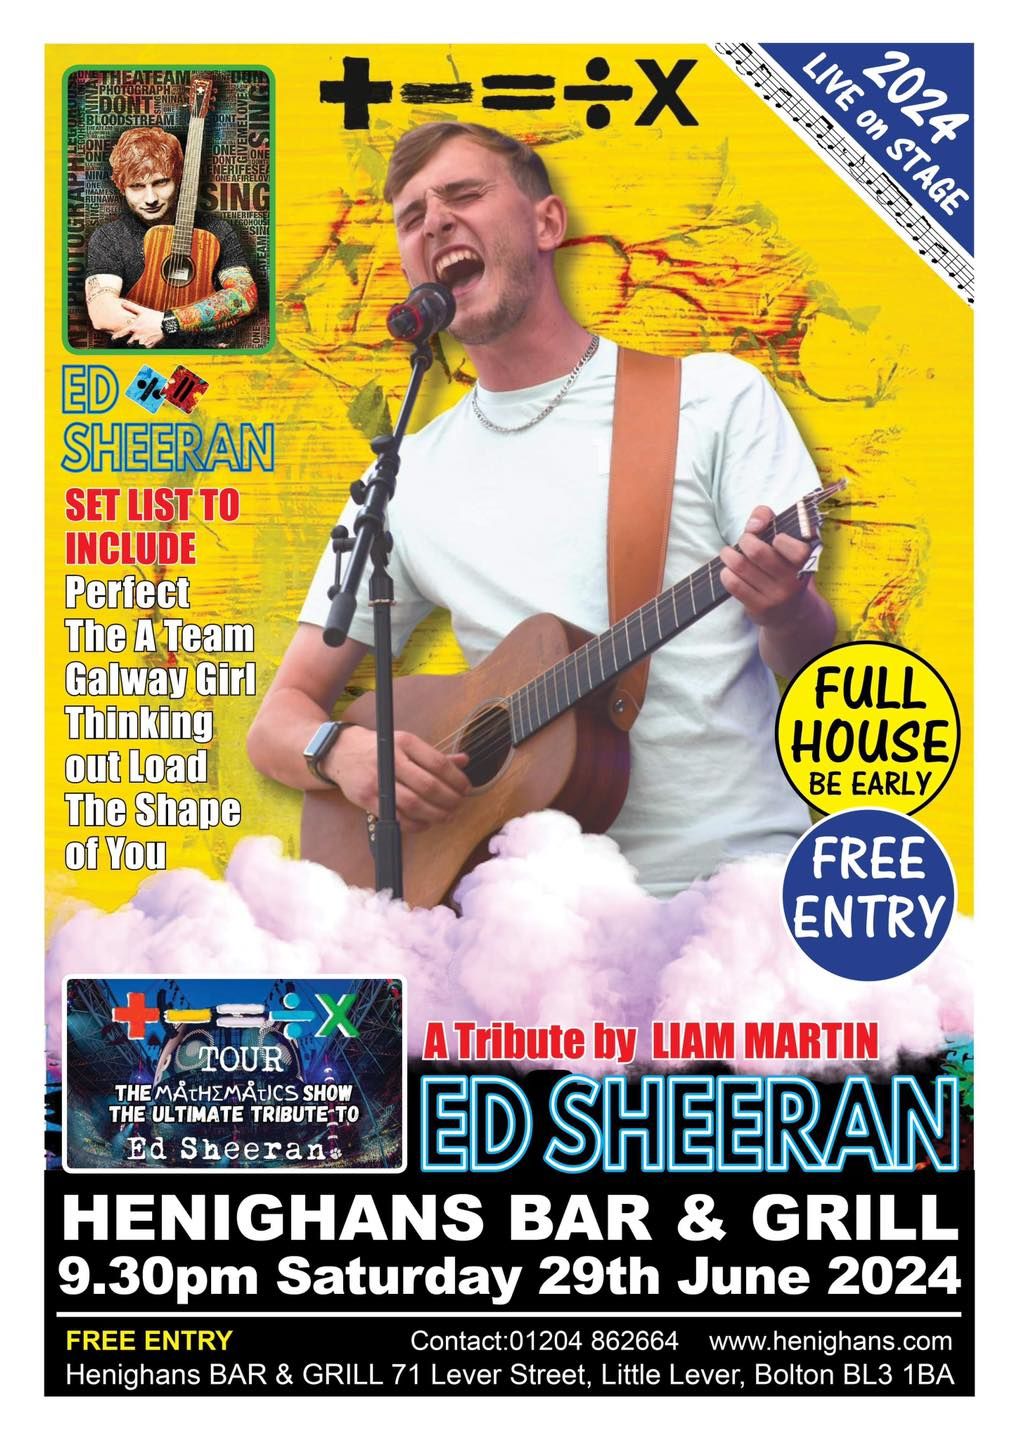 Ed Sheeran Tribute - By Liam Martin @ Henighans Bar & Grill